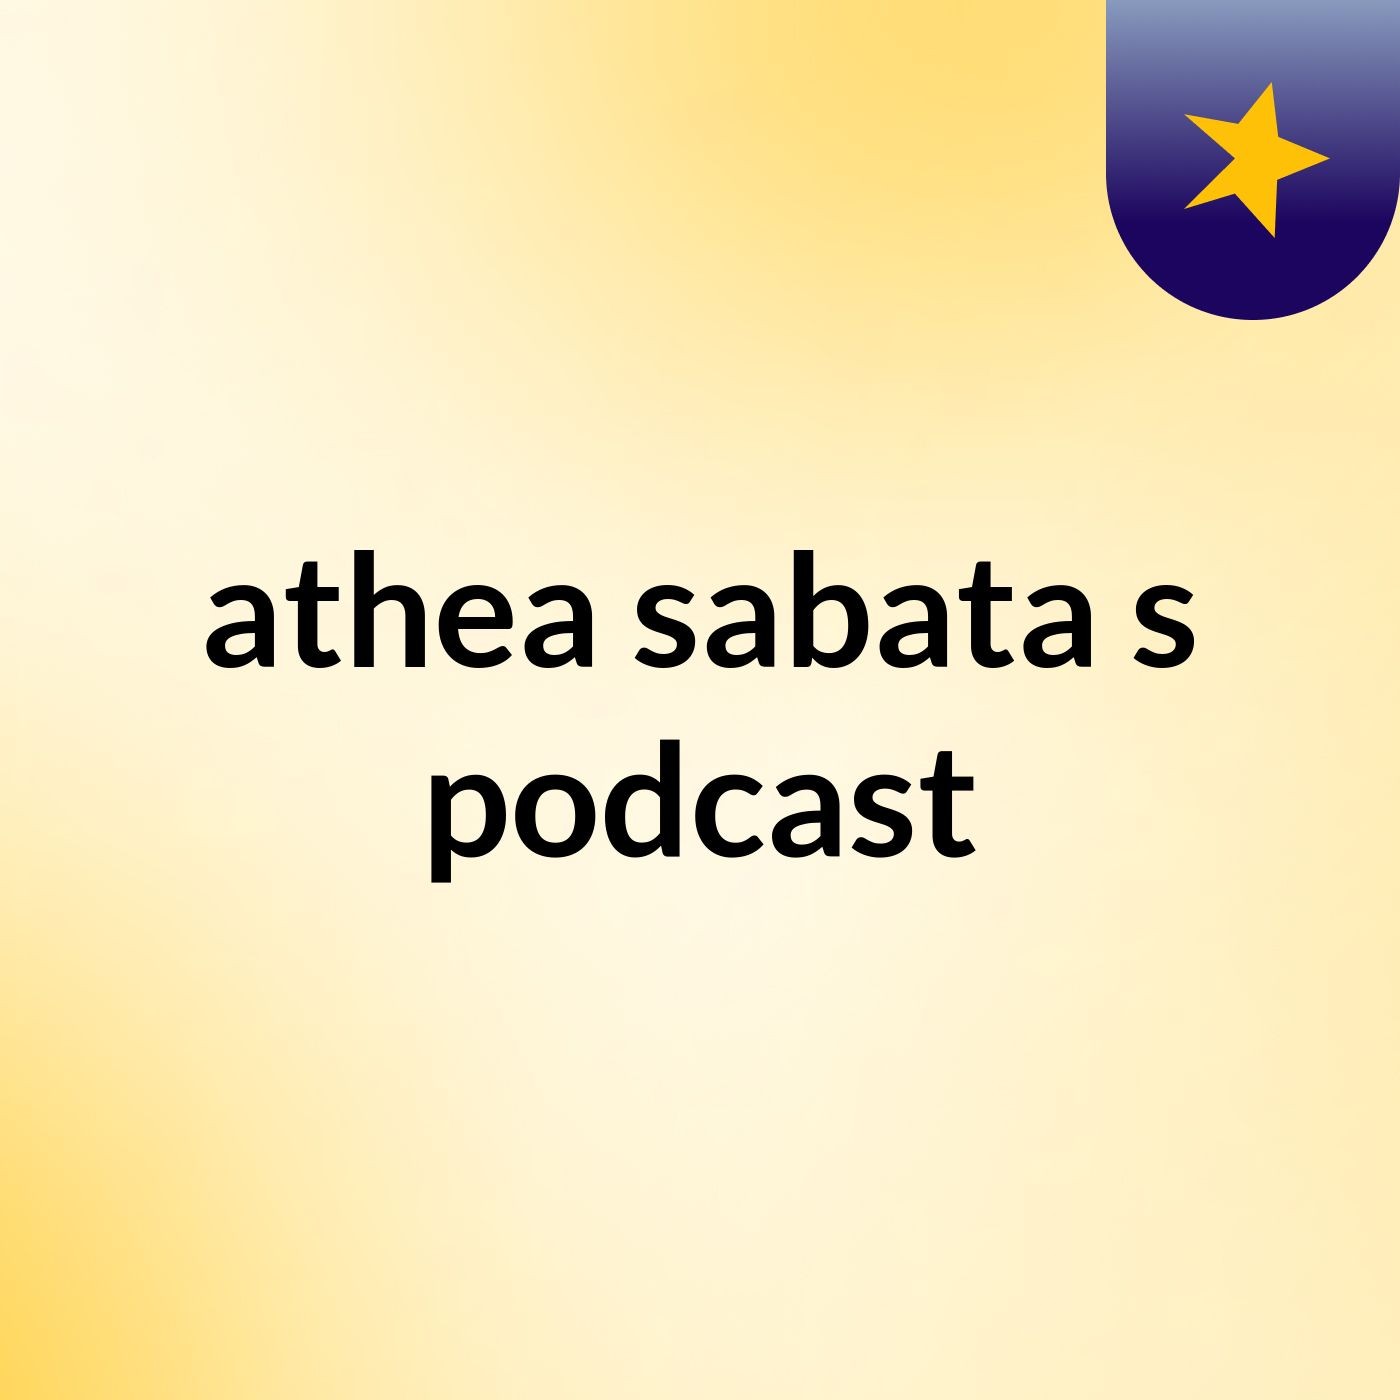 athea sabata's podcast